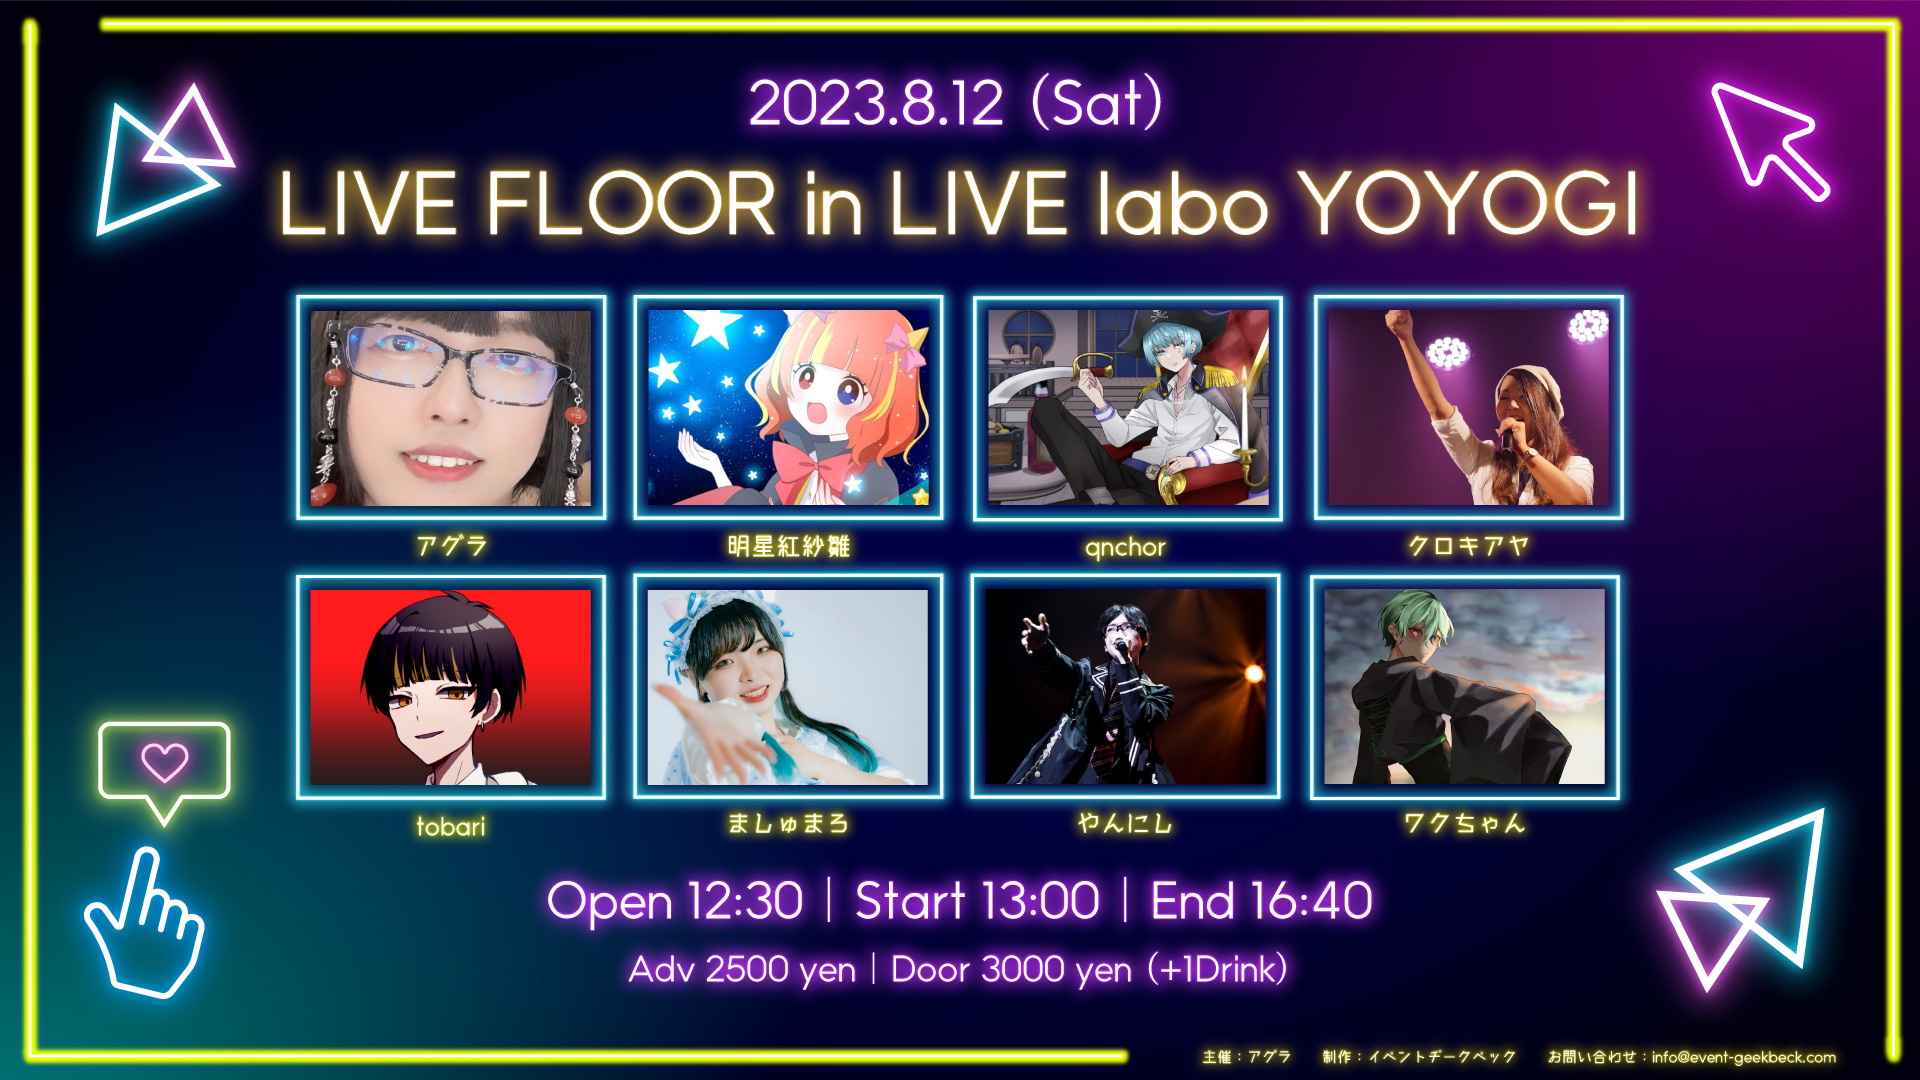 LIVE FLOOR in LIVE labo YOYOGI